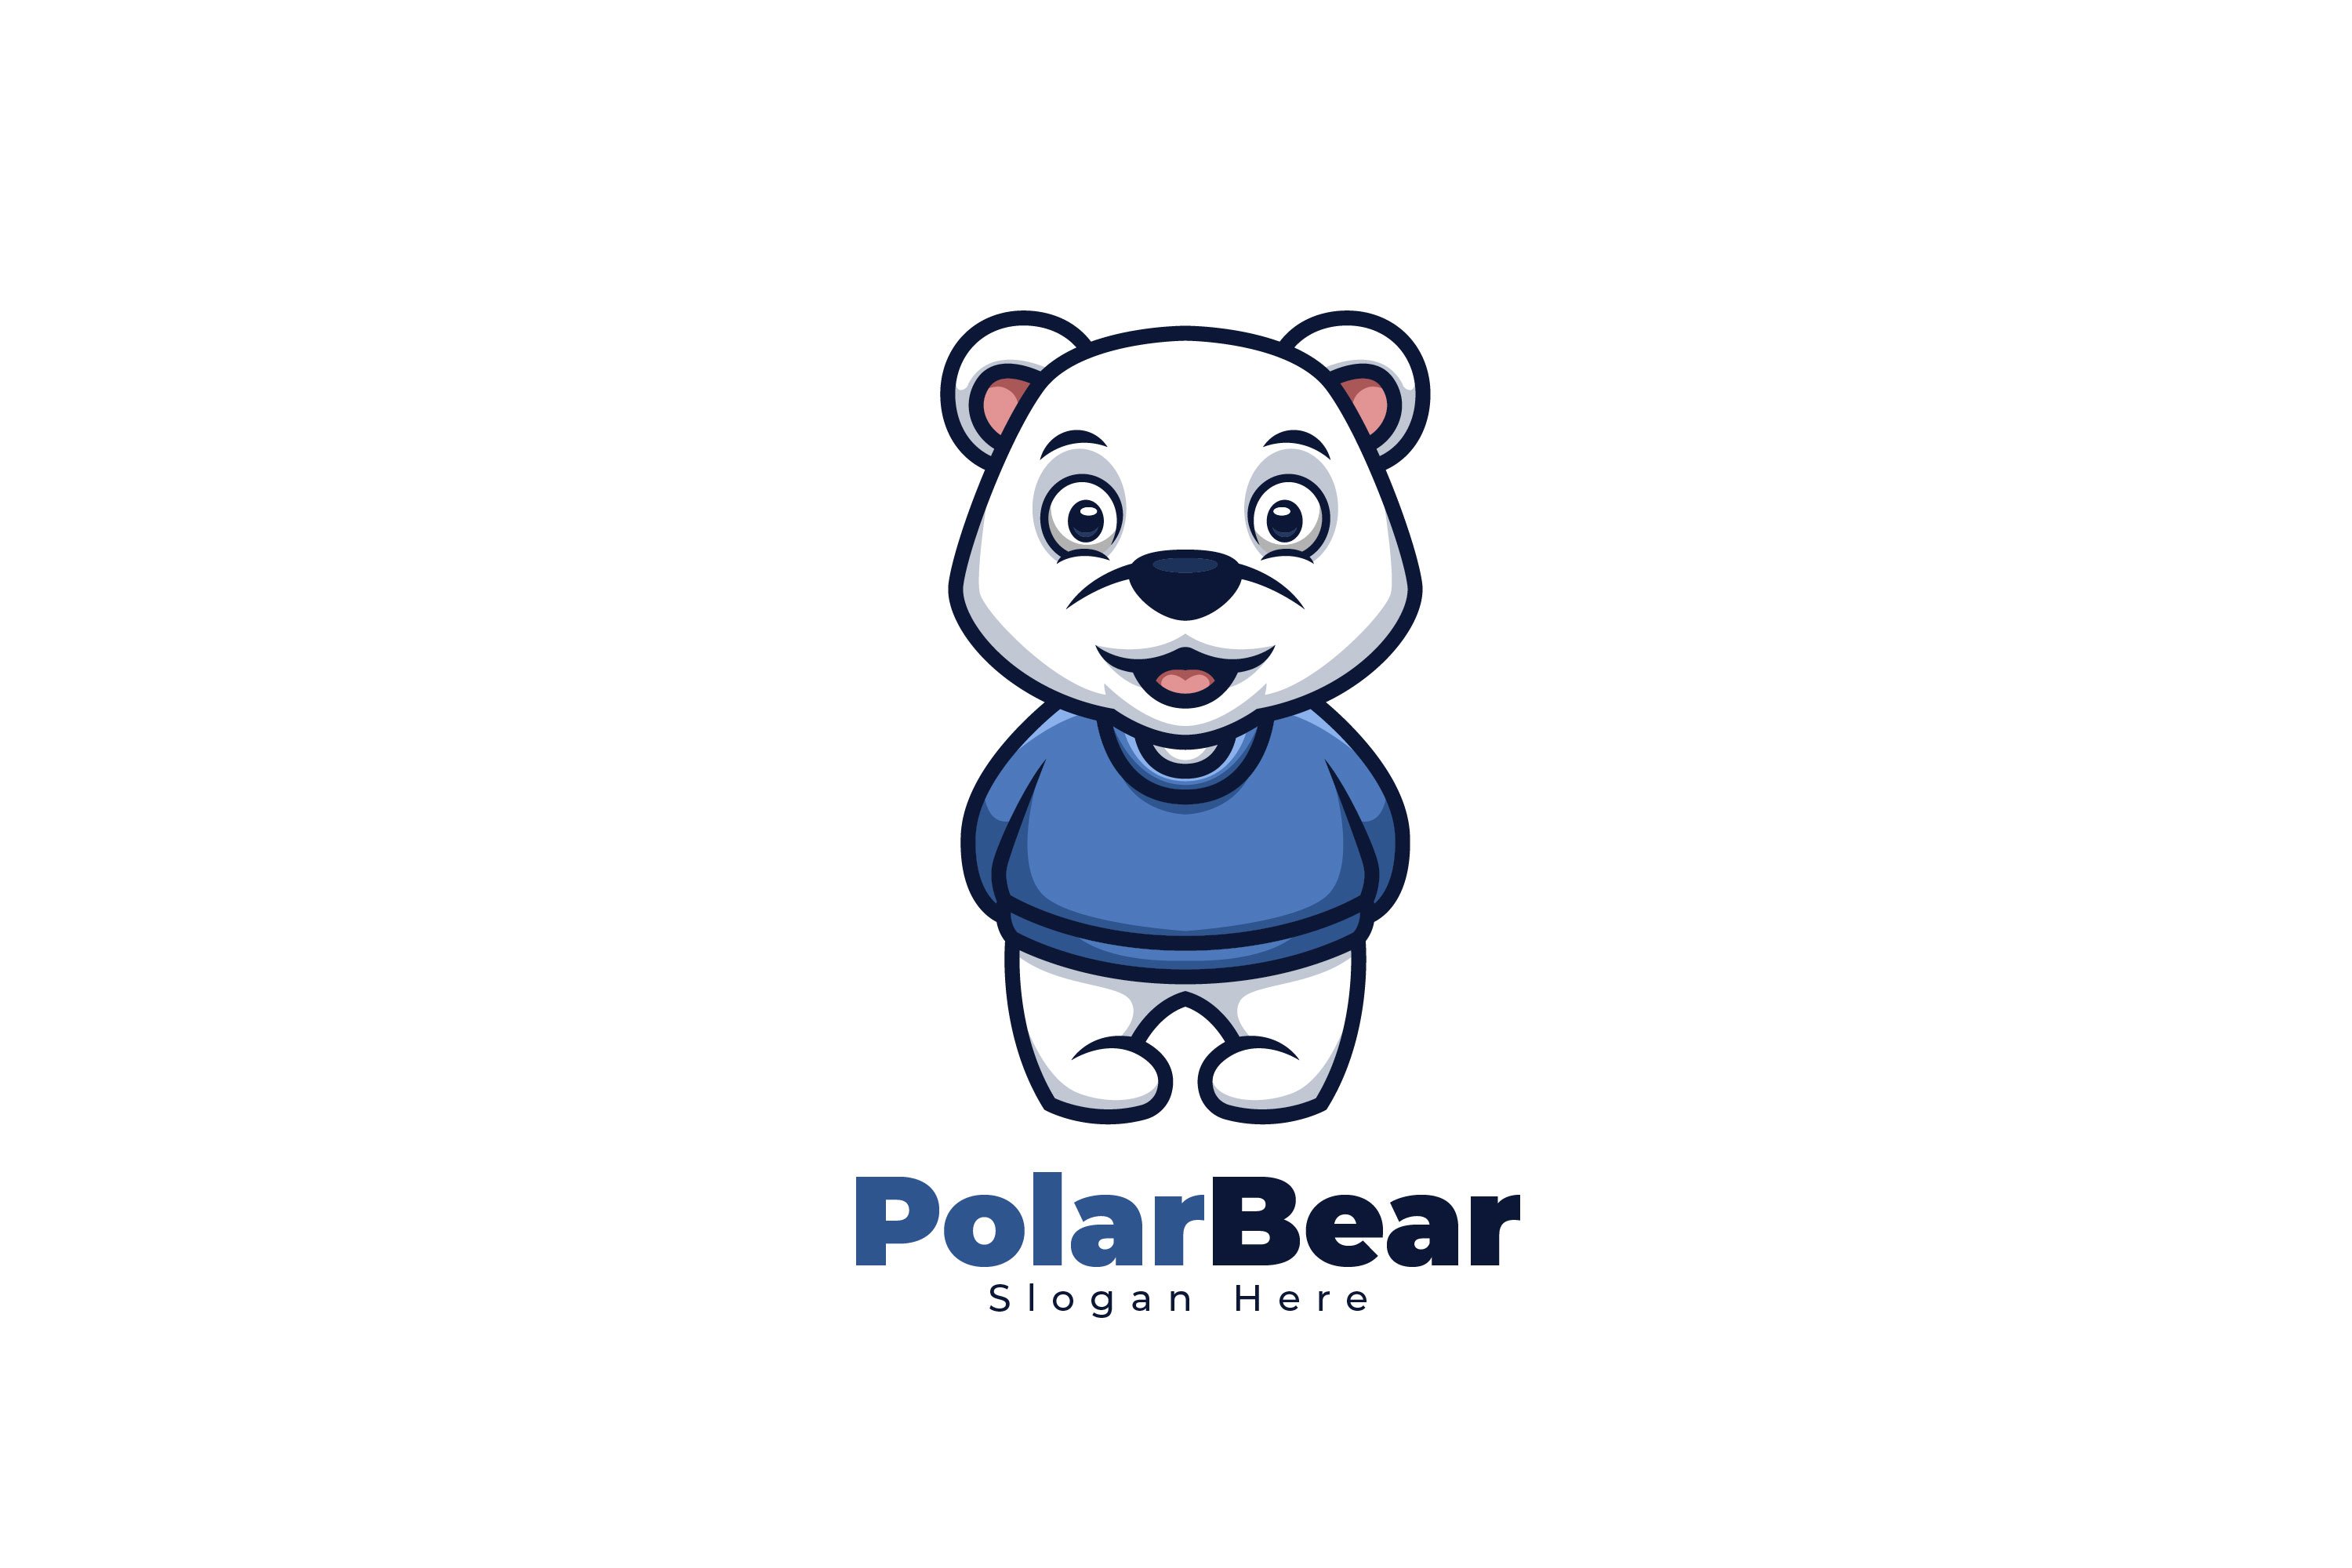 Polar Bear Blue Sweater Logo cover image.